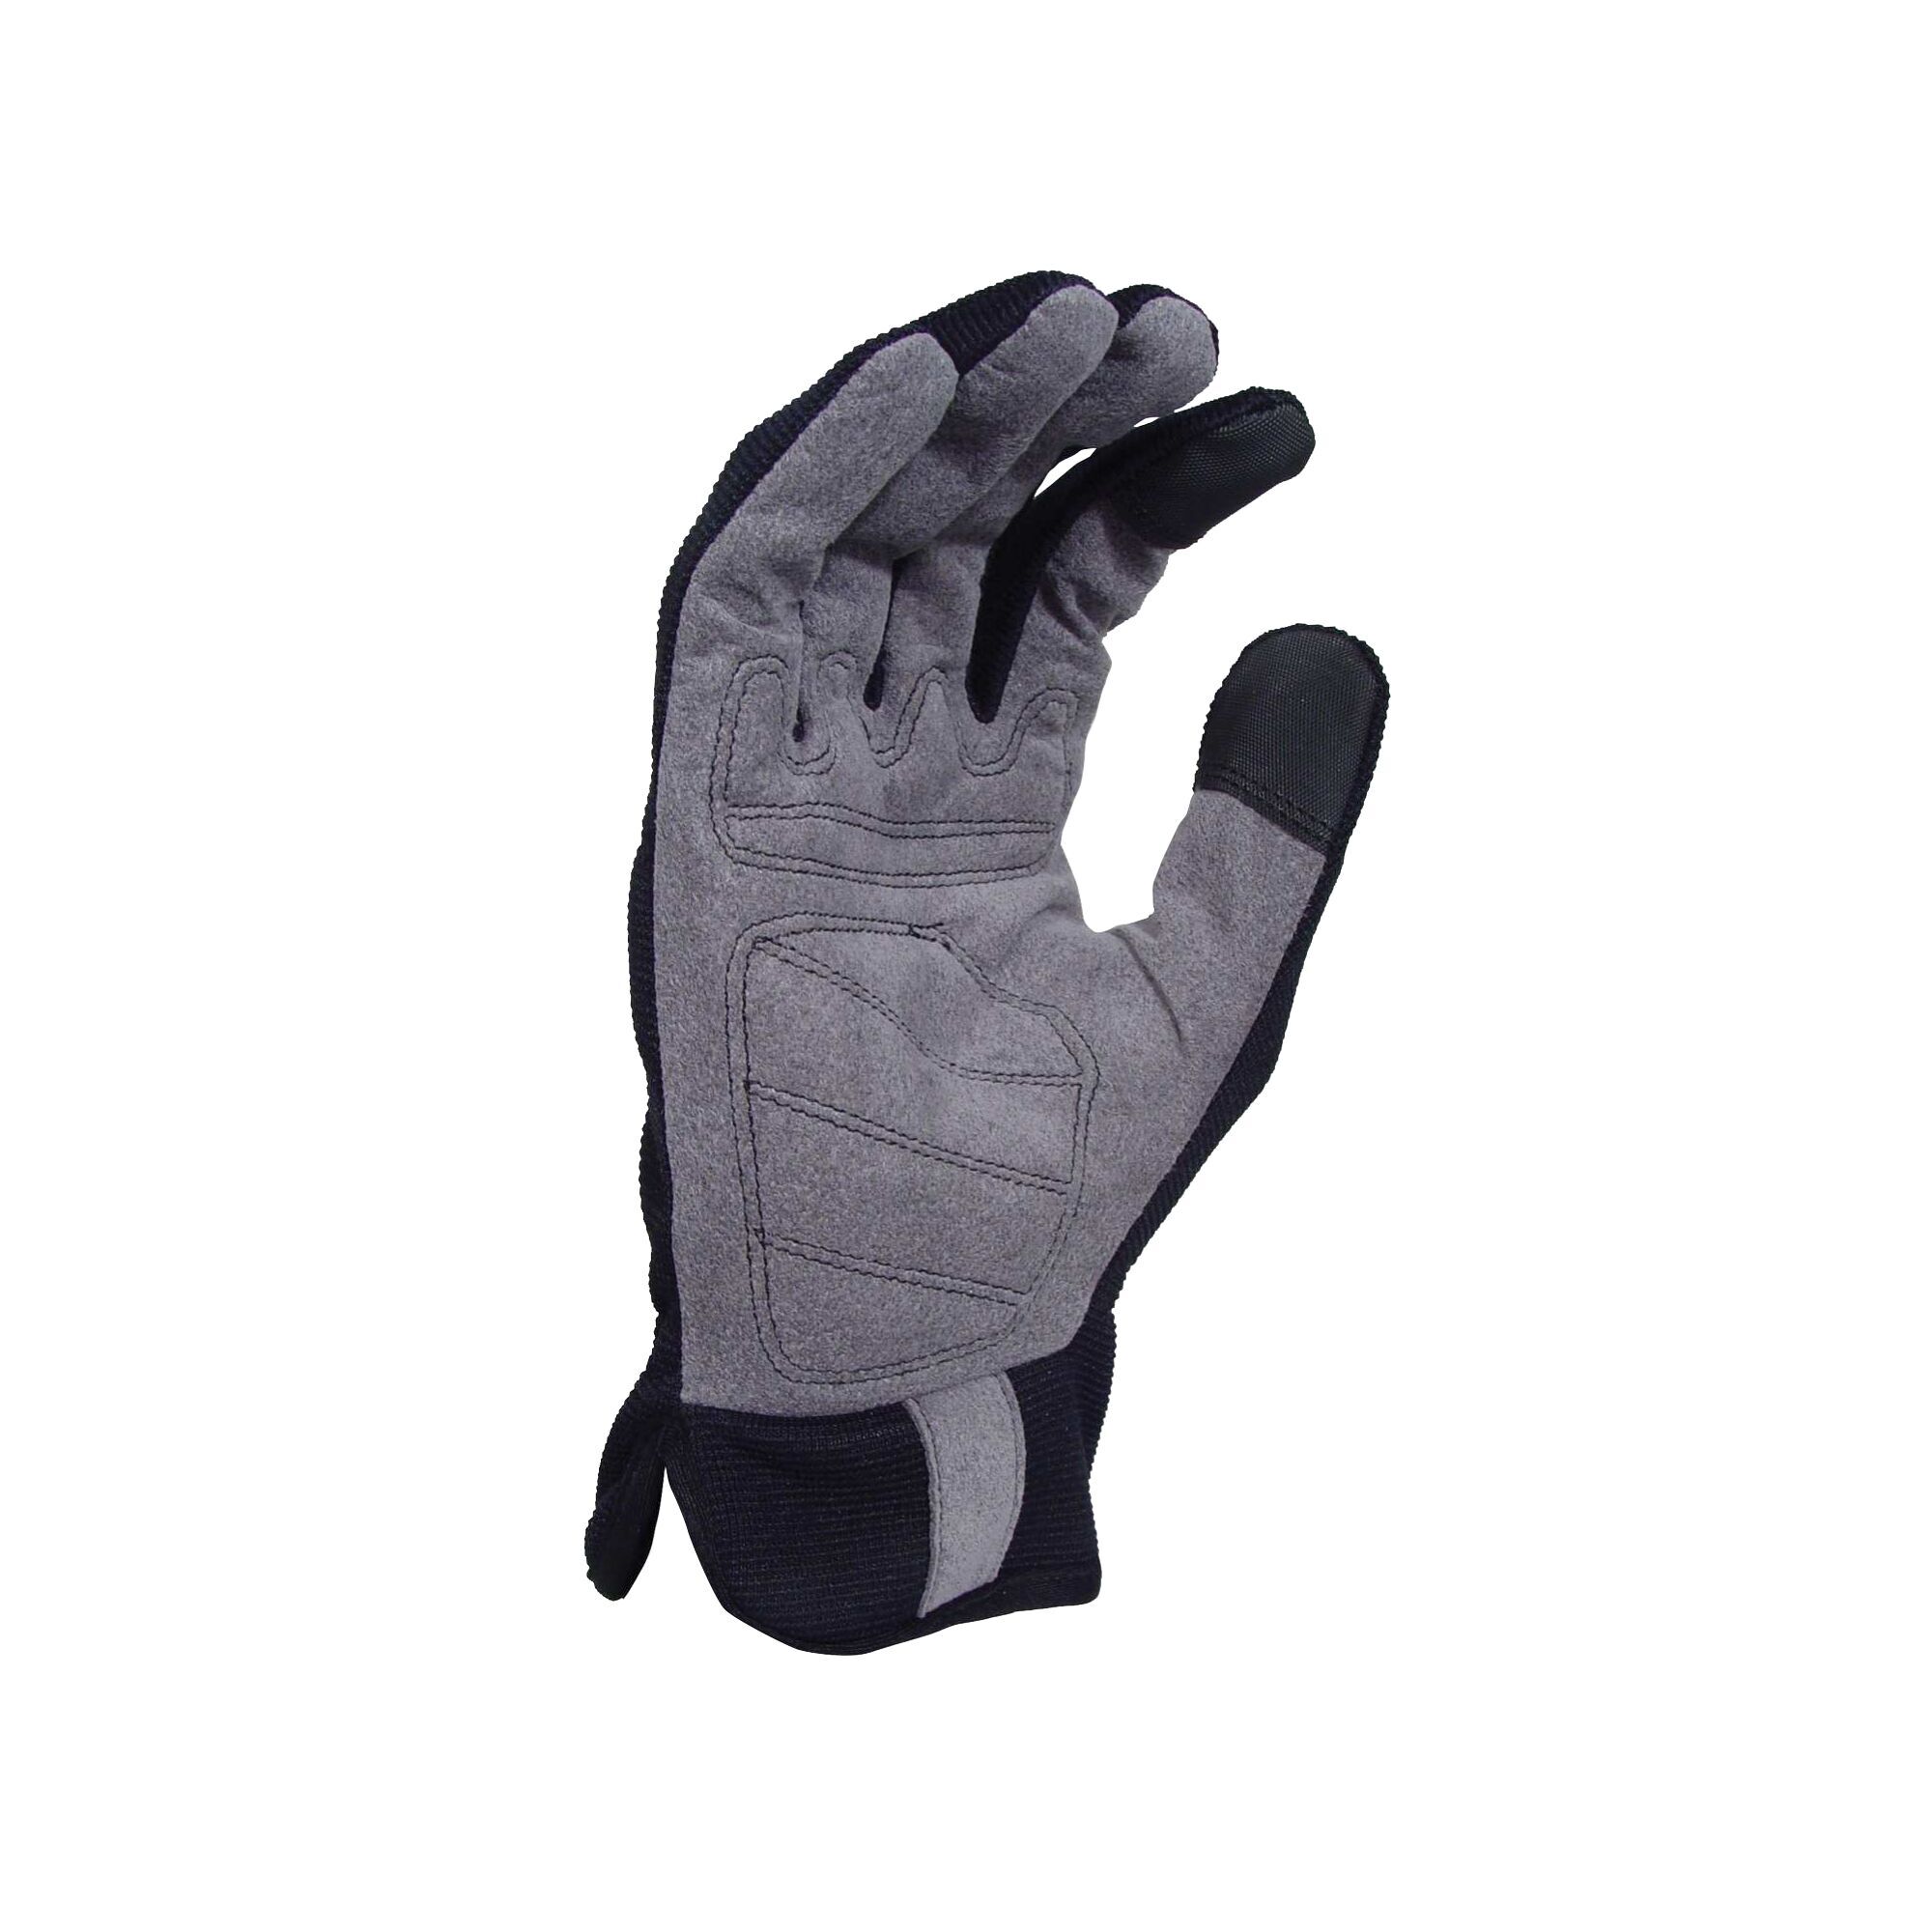 Men's RapidFit General Purpose Glove